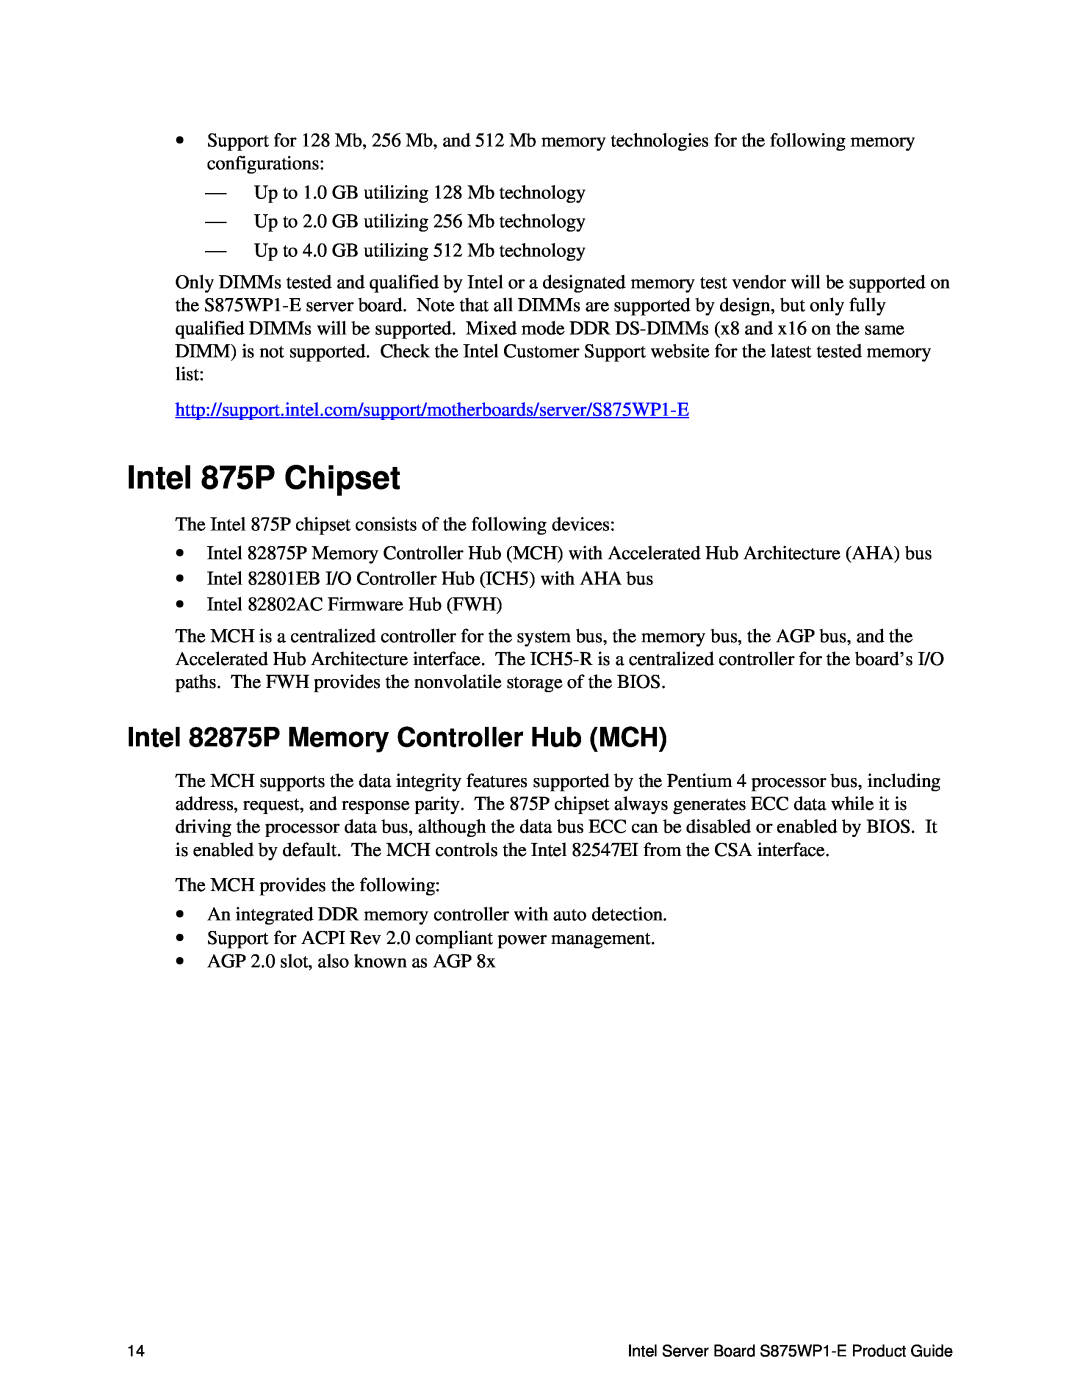 Intel S875WP1-E manual Intel 875P Chipset, Intel 82875P Memory Controller Hub MCH 